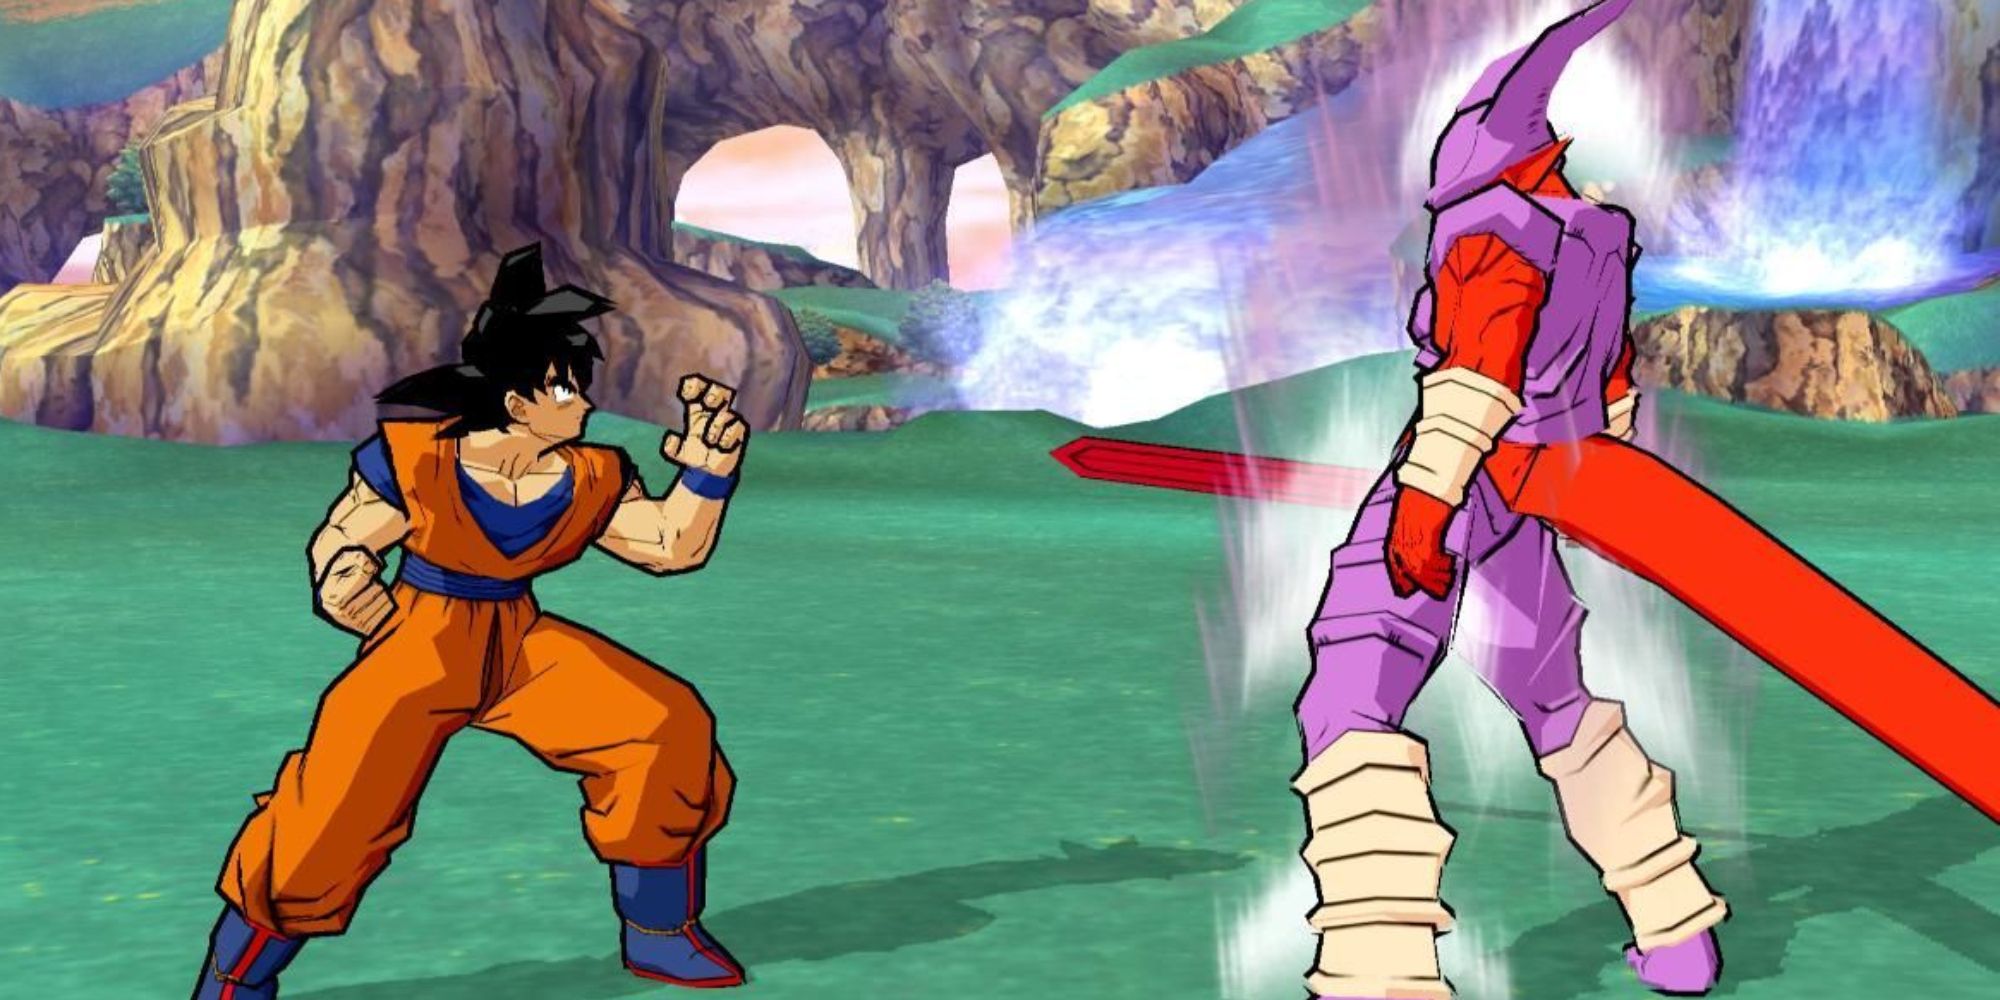 Goku and Janemba lock stares as they prepare to fight.